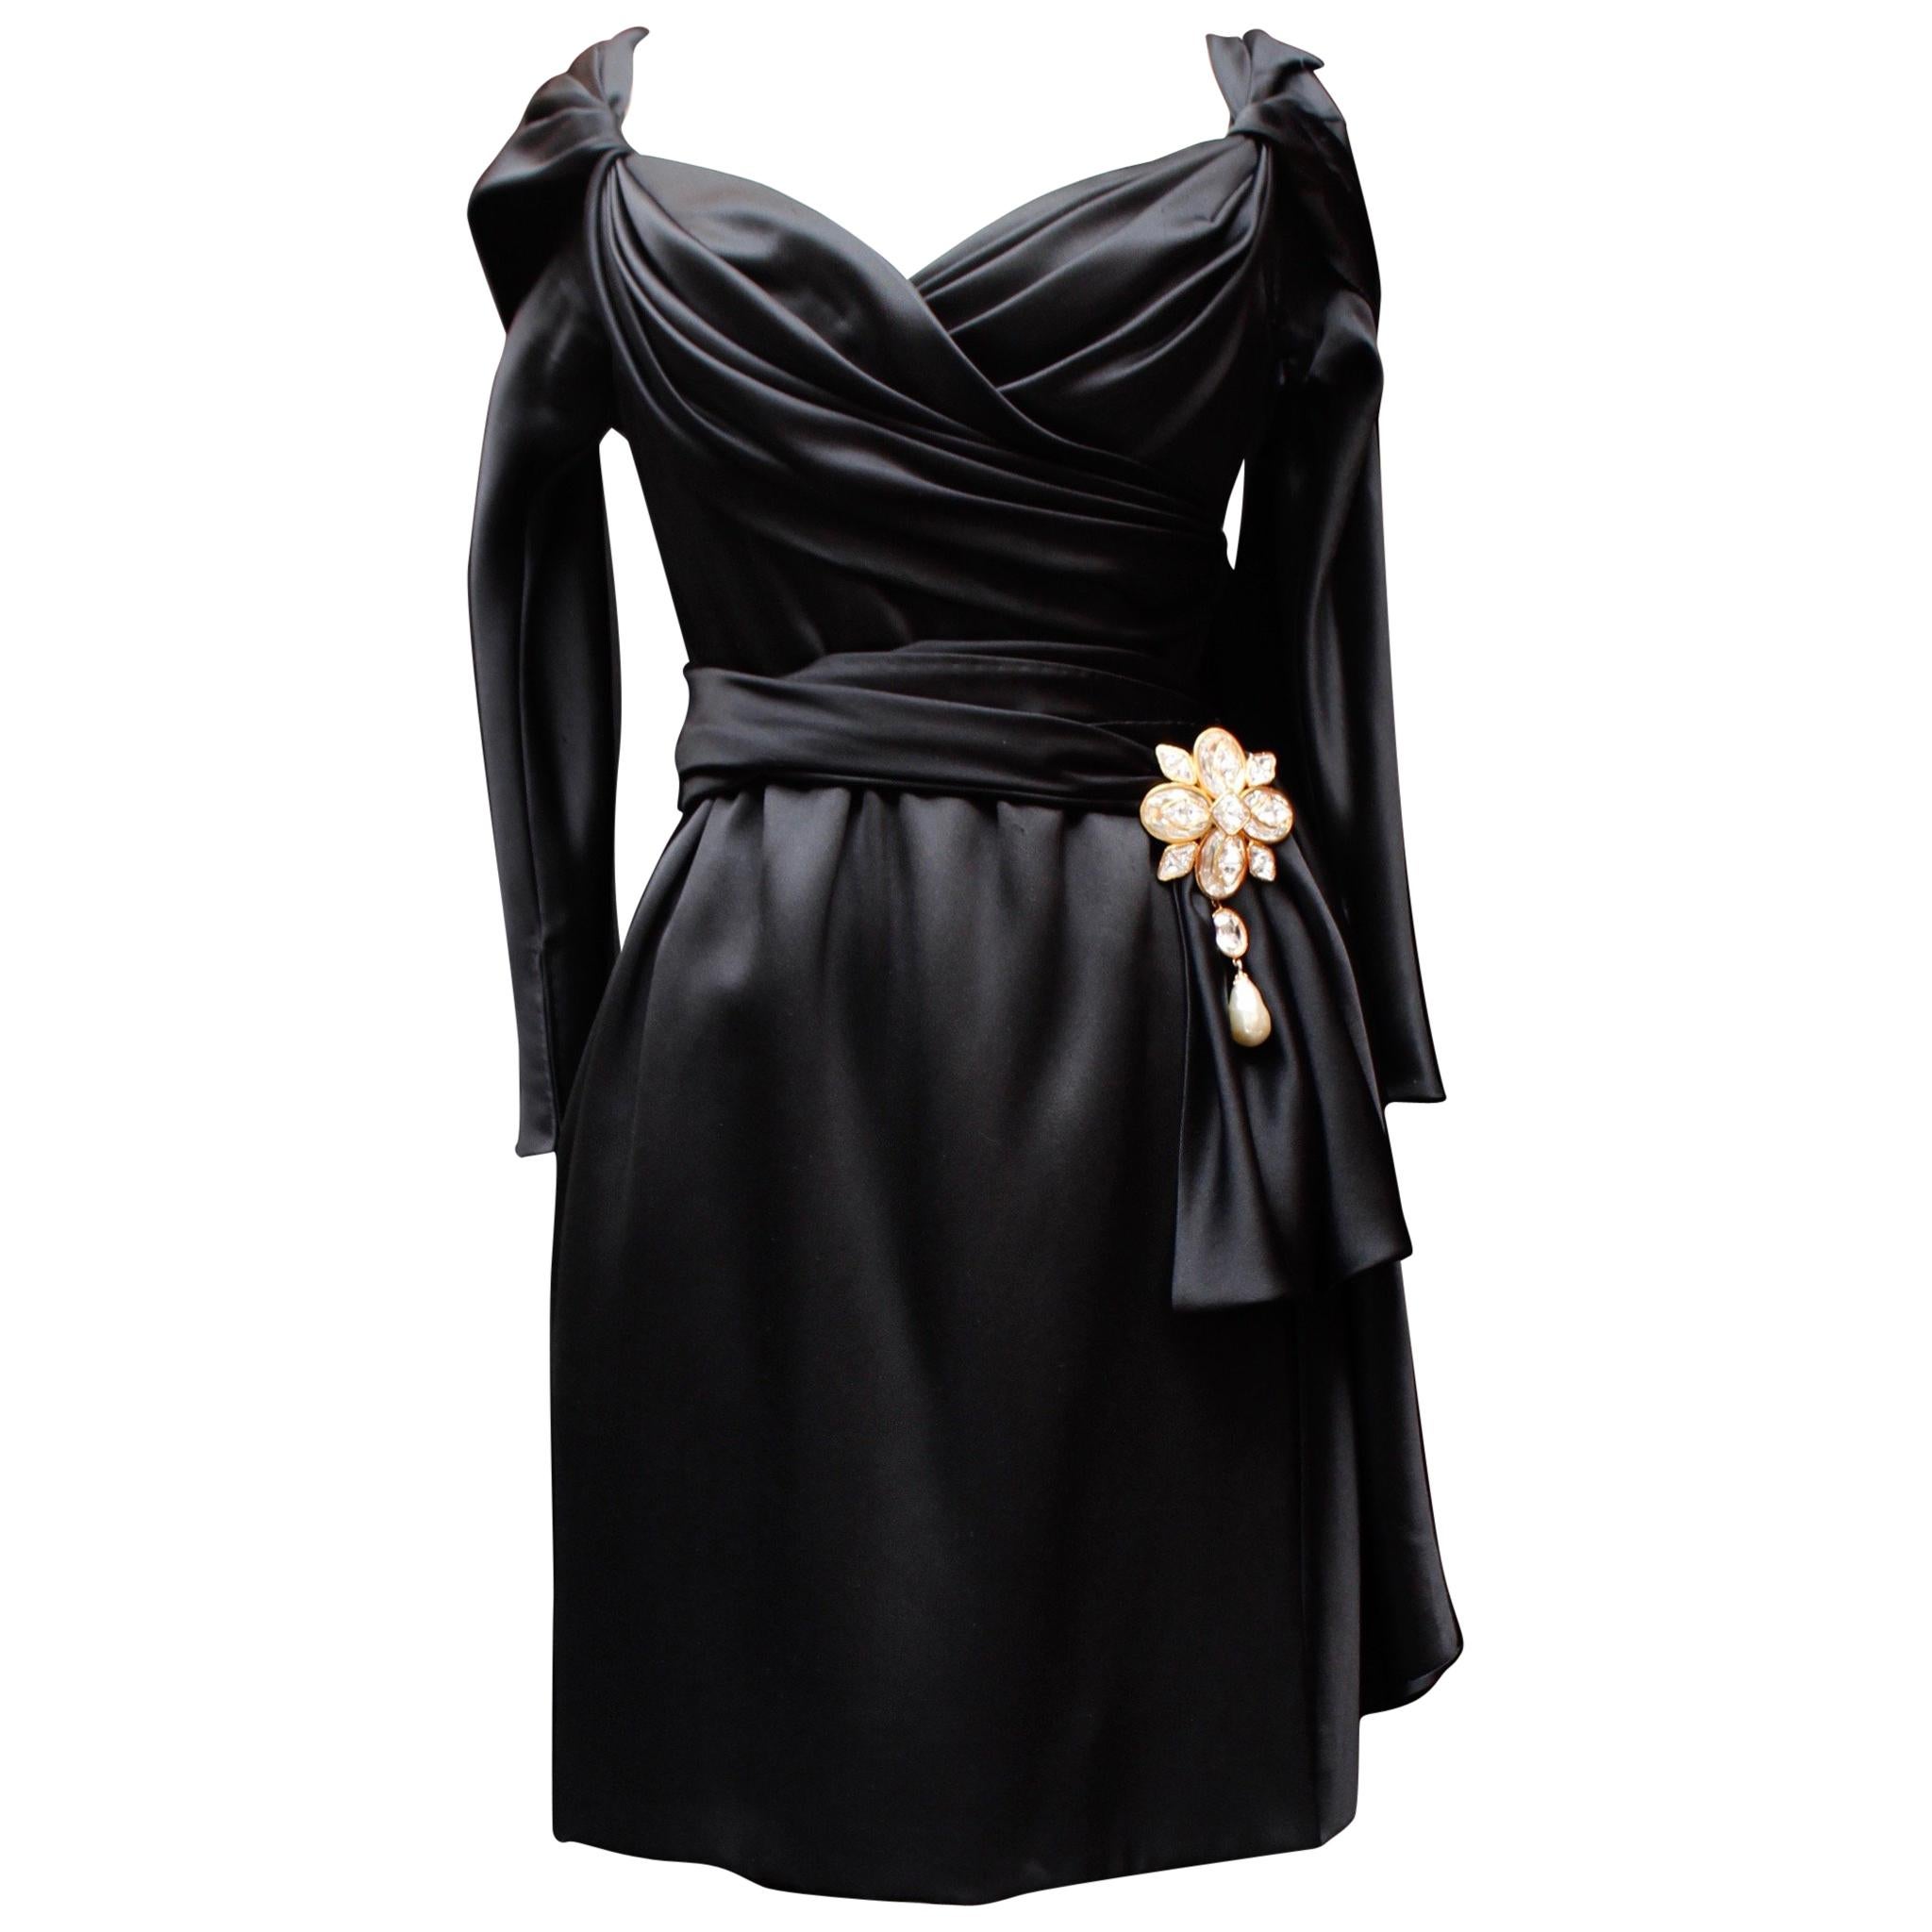 Givenchy Haute Couture black satin sheath dress